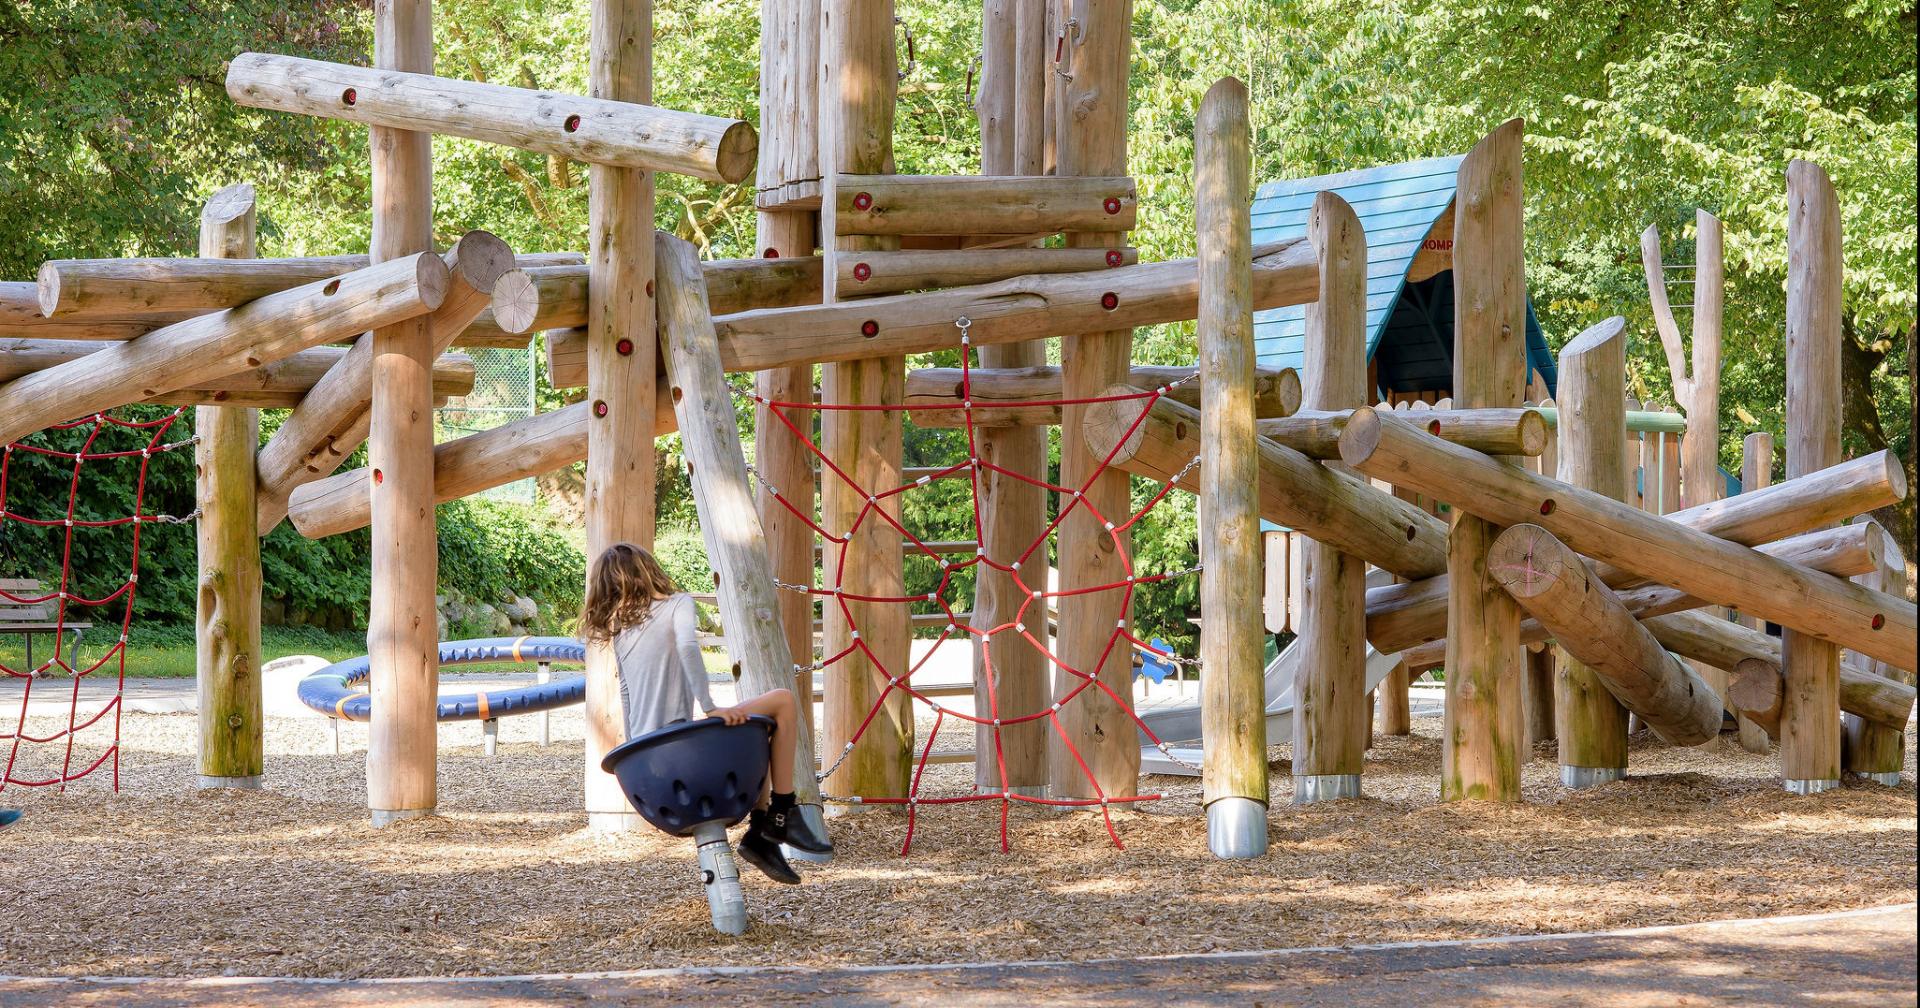 clark recreation playground airmount